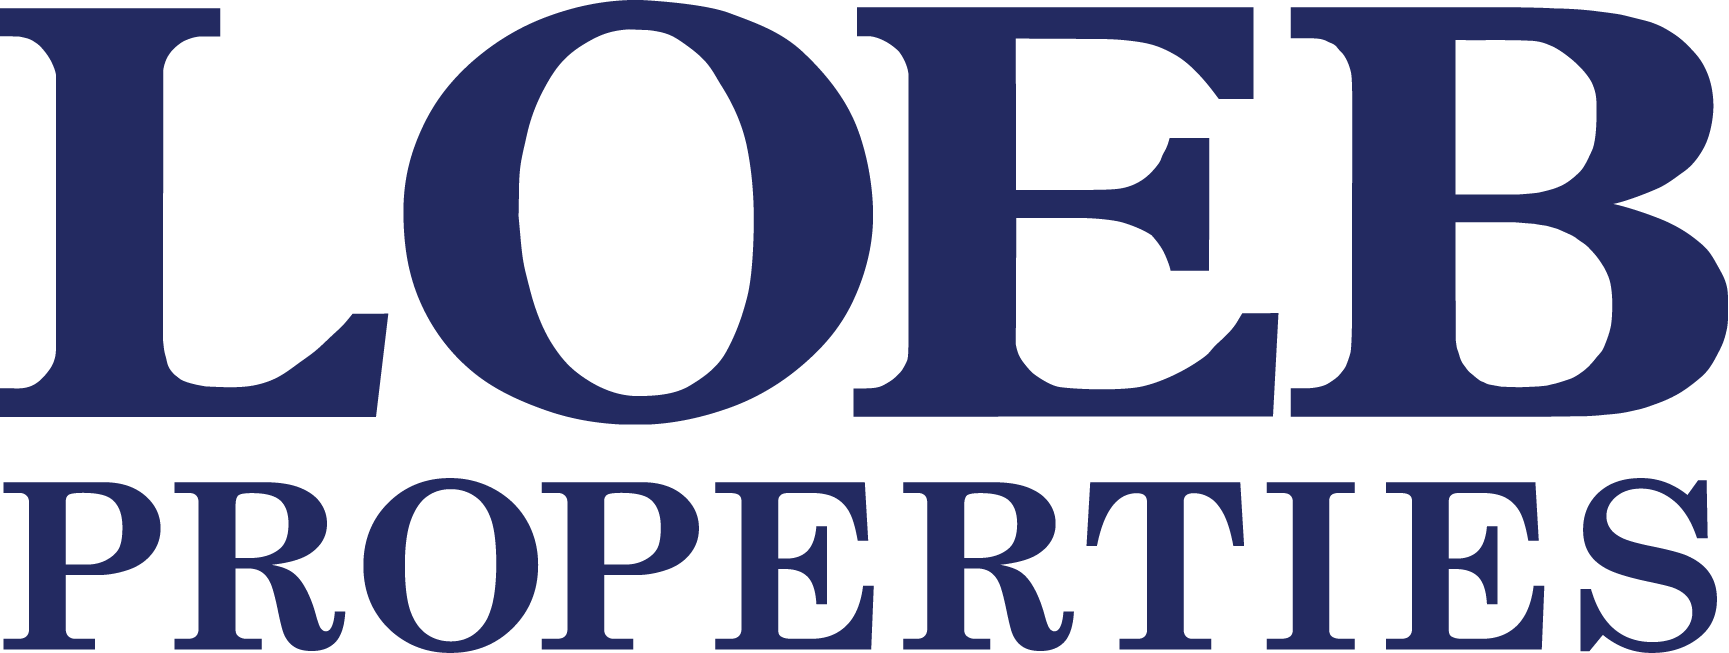 Loeb-logo-blue